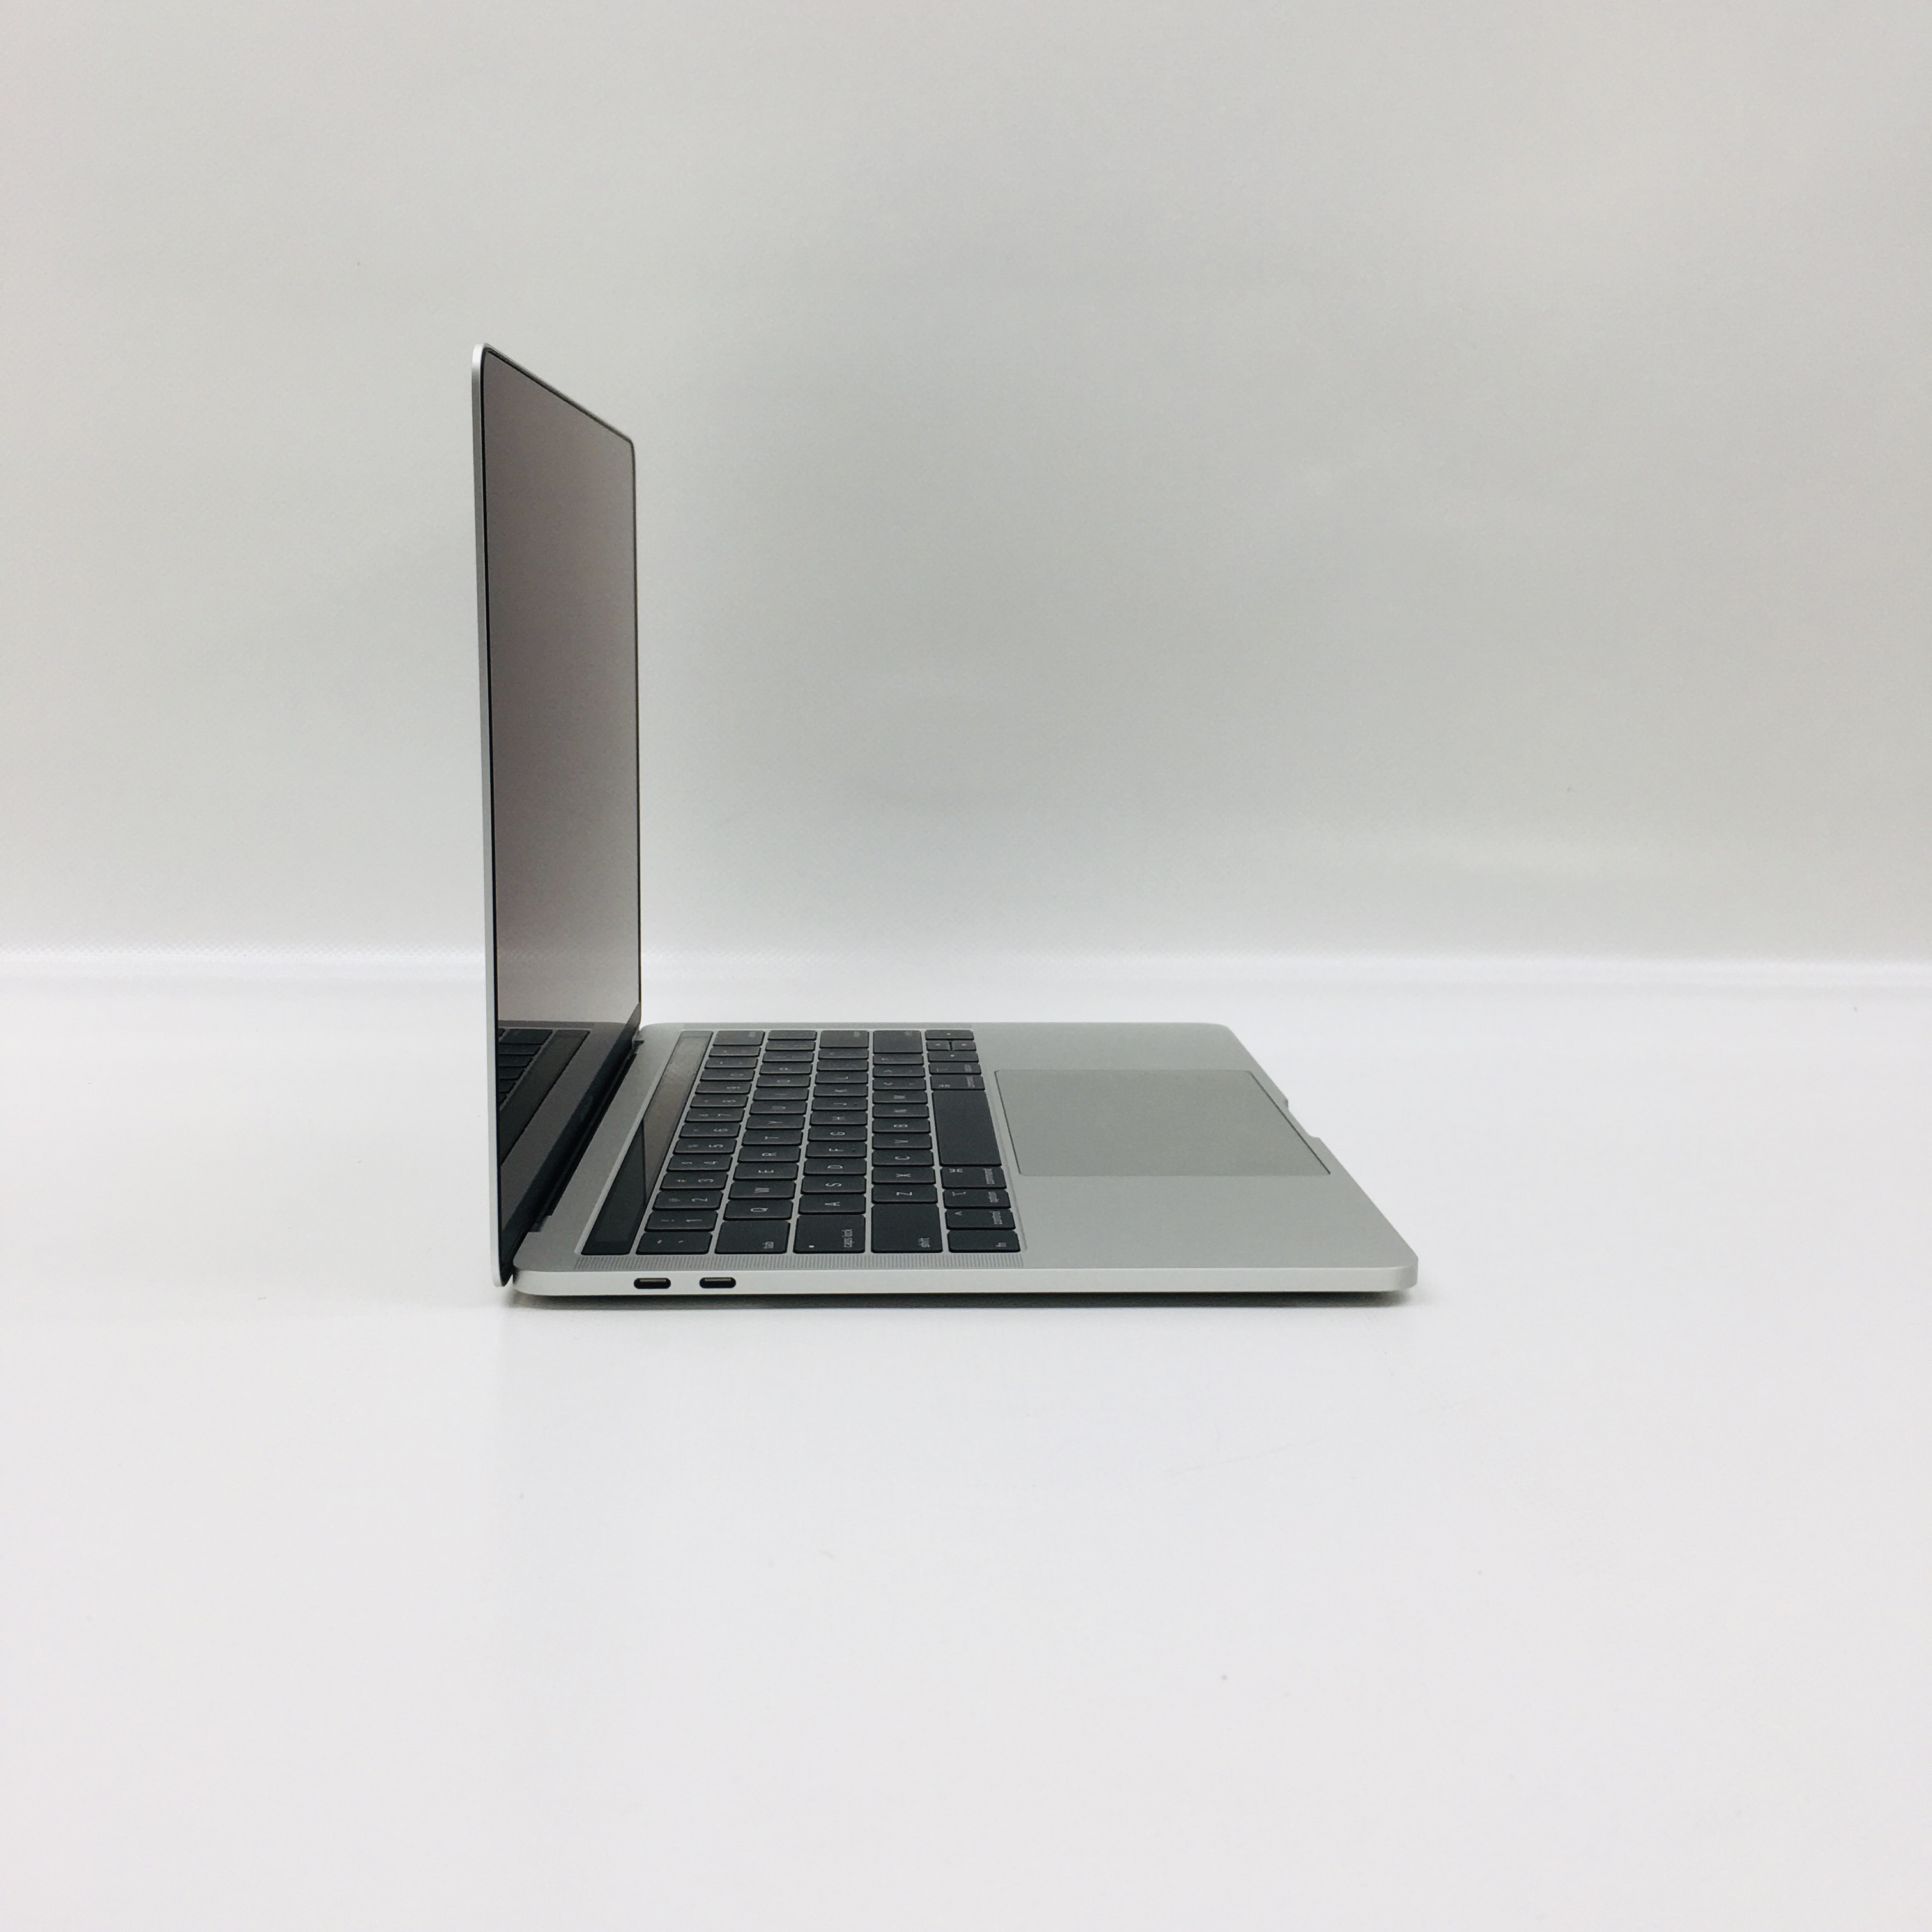 MacBook Pro 13" 4TBT Mid 2019 (Intel Quad-Core i5 2.4 GHz 8 GB RAM 256 GB SSD), Silver, Intel Quad-Core i5 2.4 GHz, 8 GB RAM, 256 GB SSD, image 2